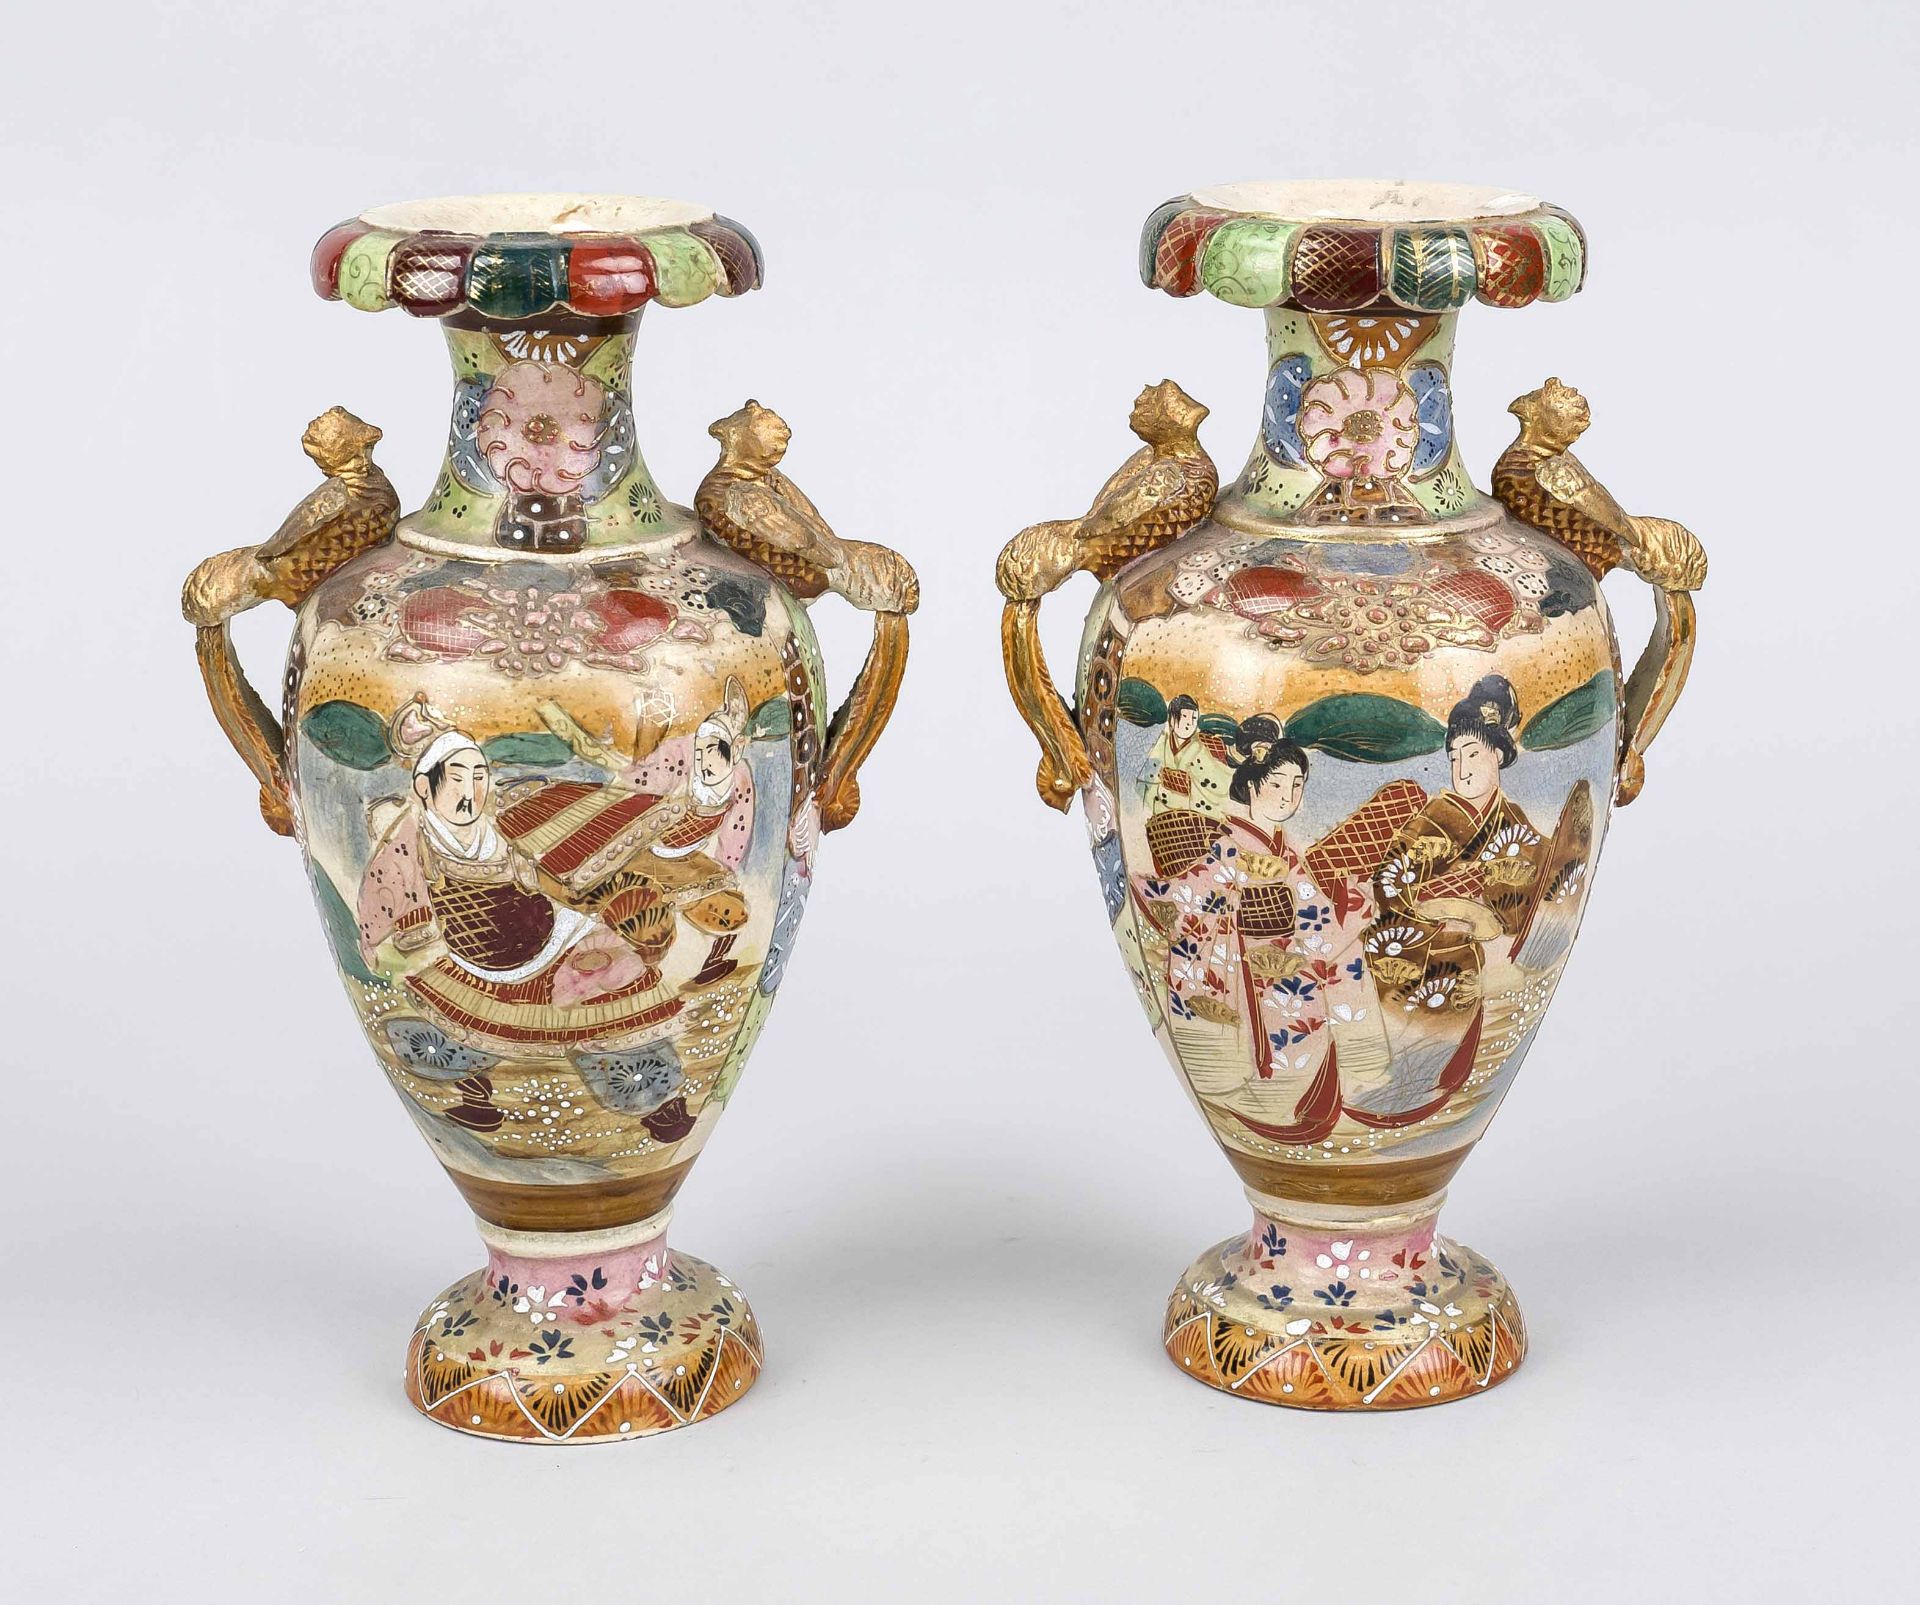 Pair of Satsuma vases, Japan c. 1900 (Meiji). Baluster shape with gold-decorated phoenix handles.